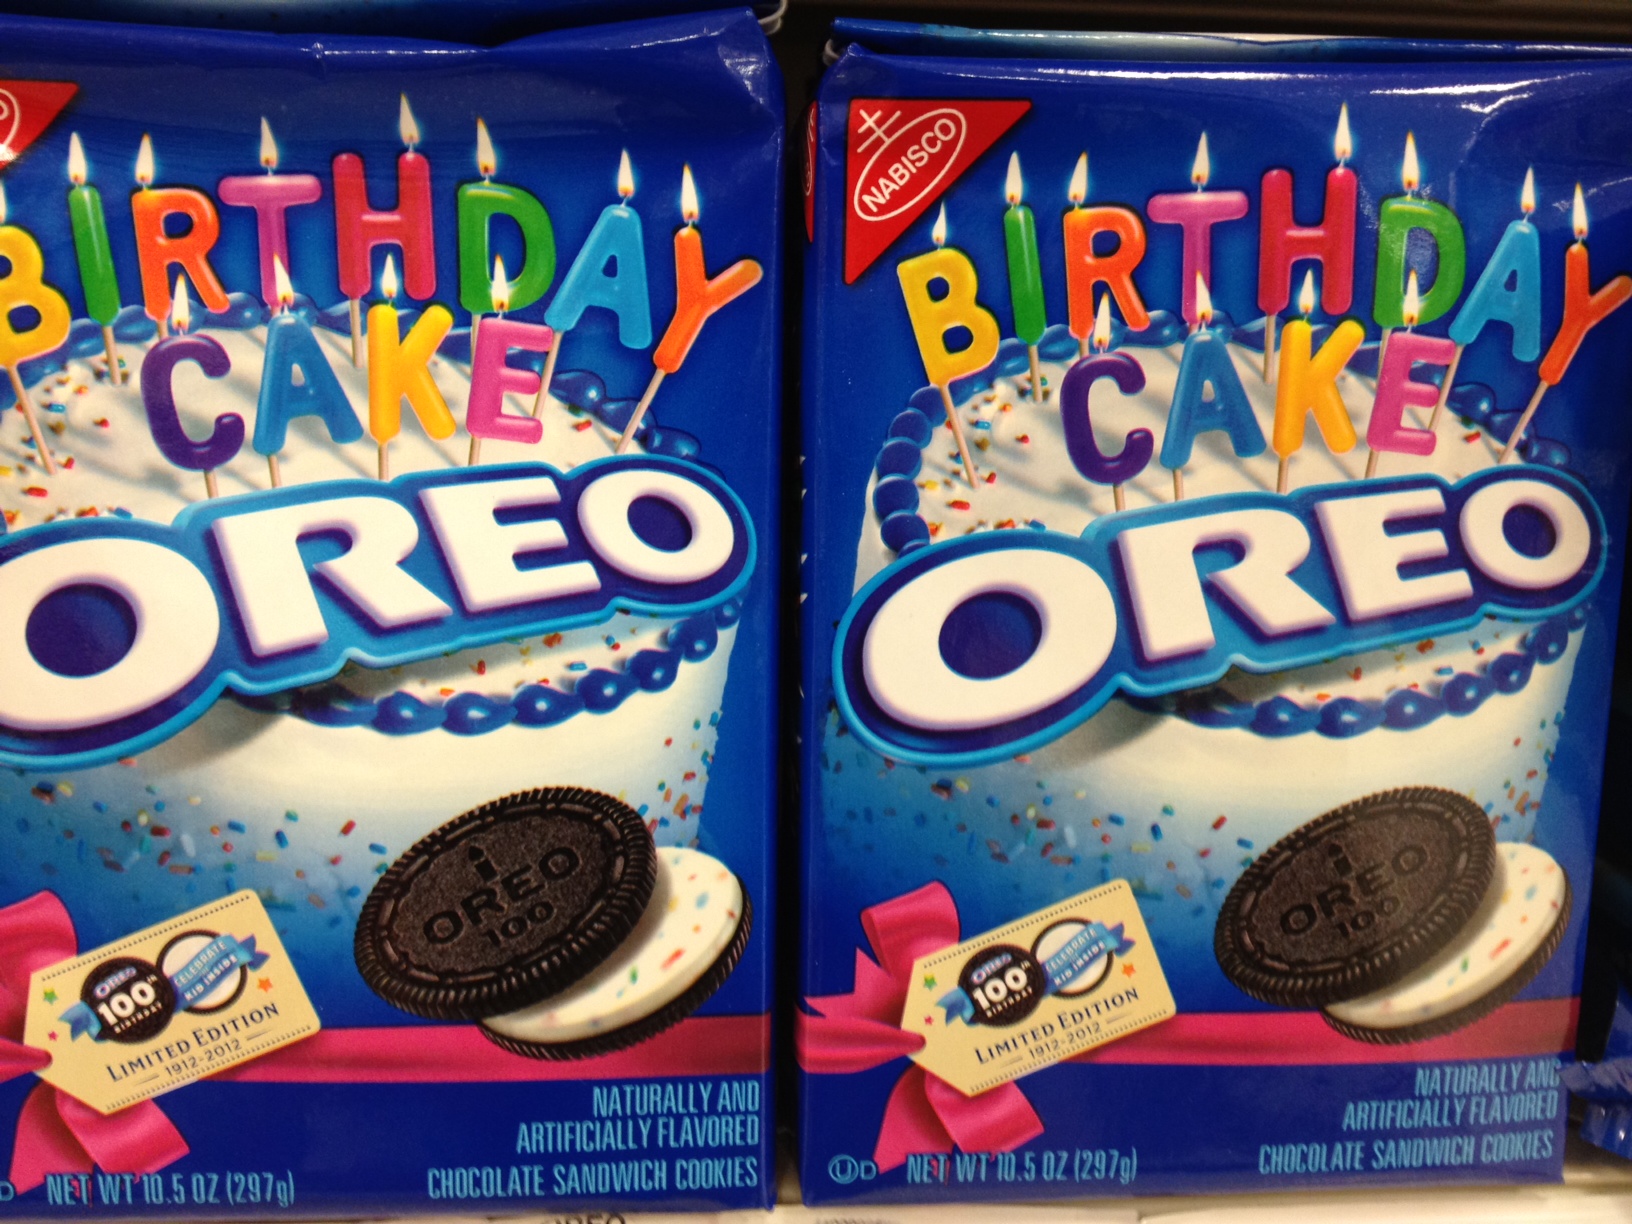 Birthday Cake Oreo on The Limited Edition Birthday Cake Oreo Cookie